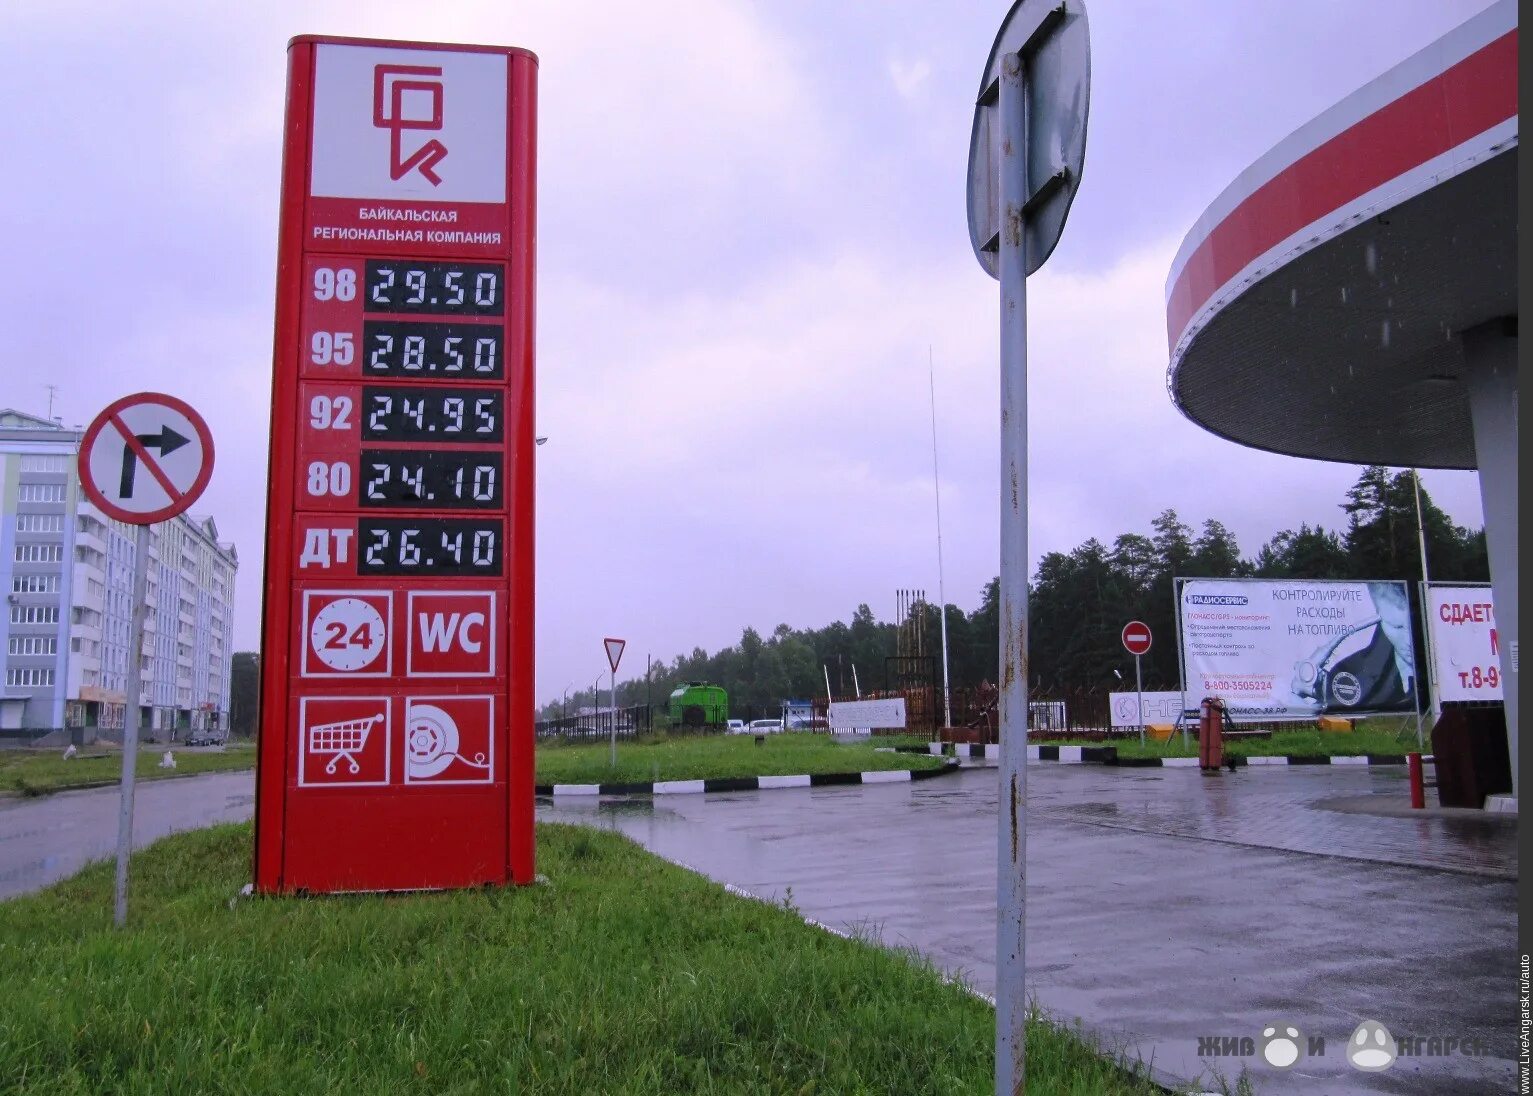 Стела АЗС. Бензин АЗС. Бензин в 2012 году. Самый дешевый ГАЗ на АЗС.